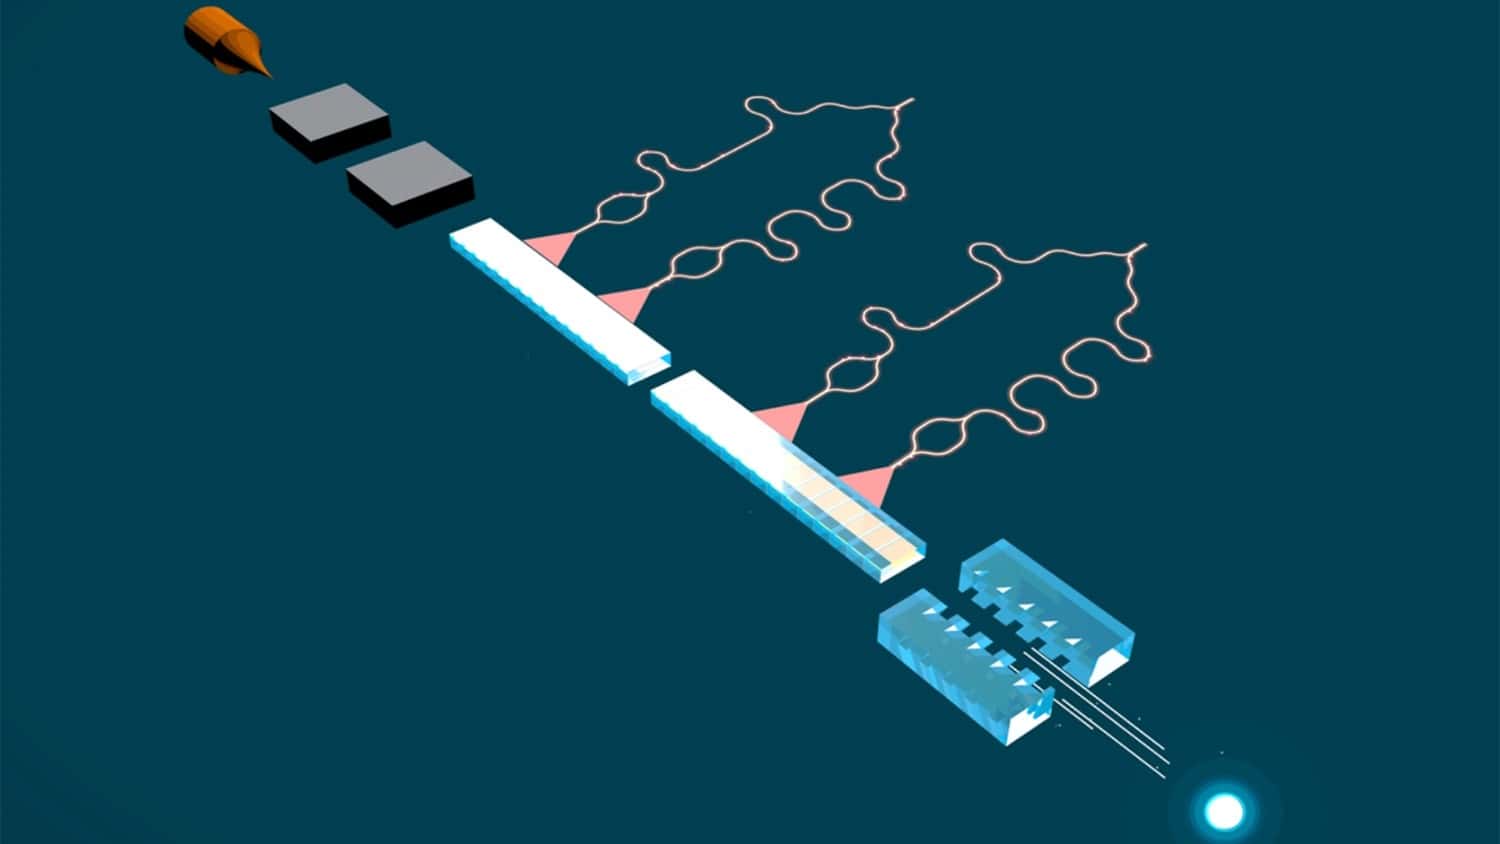 Physics World: A dielectric laser accelerator produces a precise electron beam focus